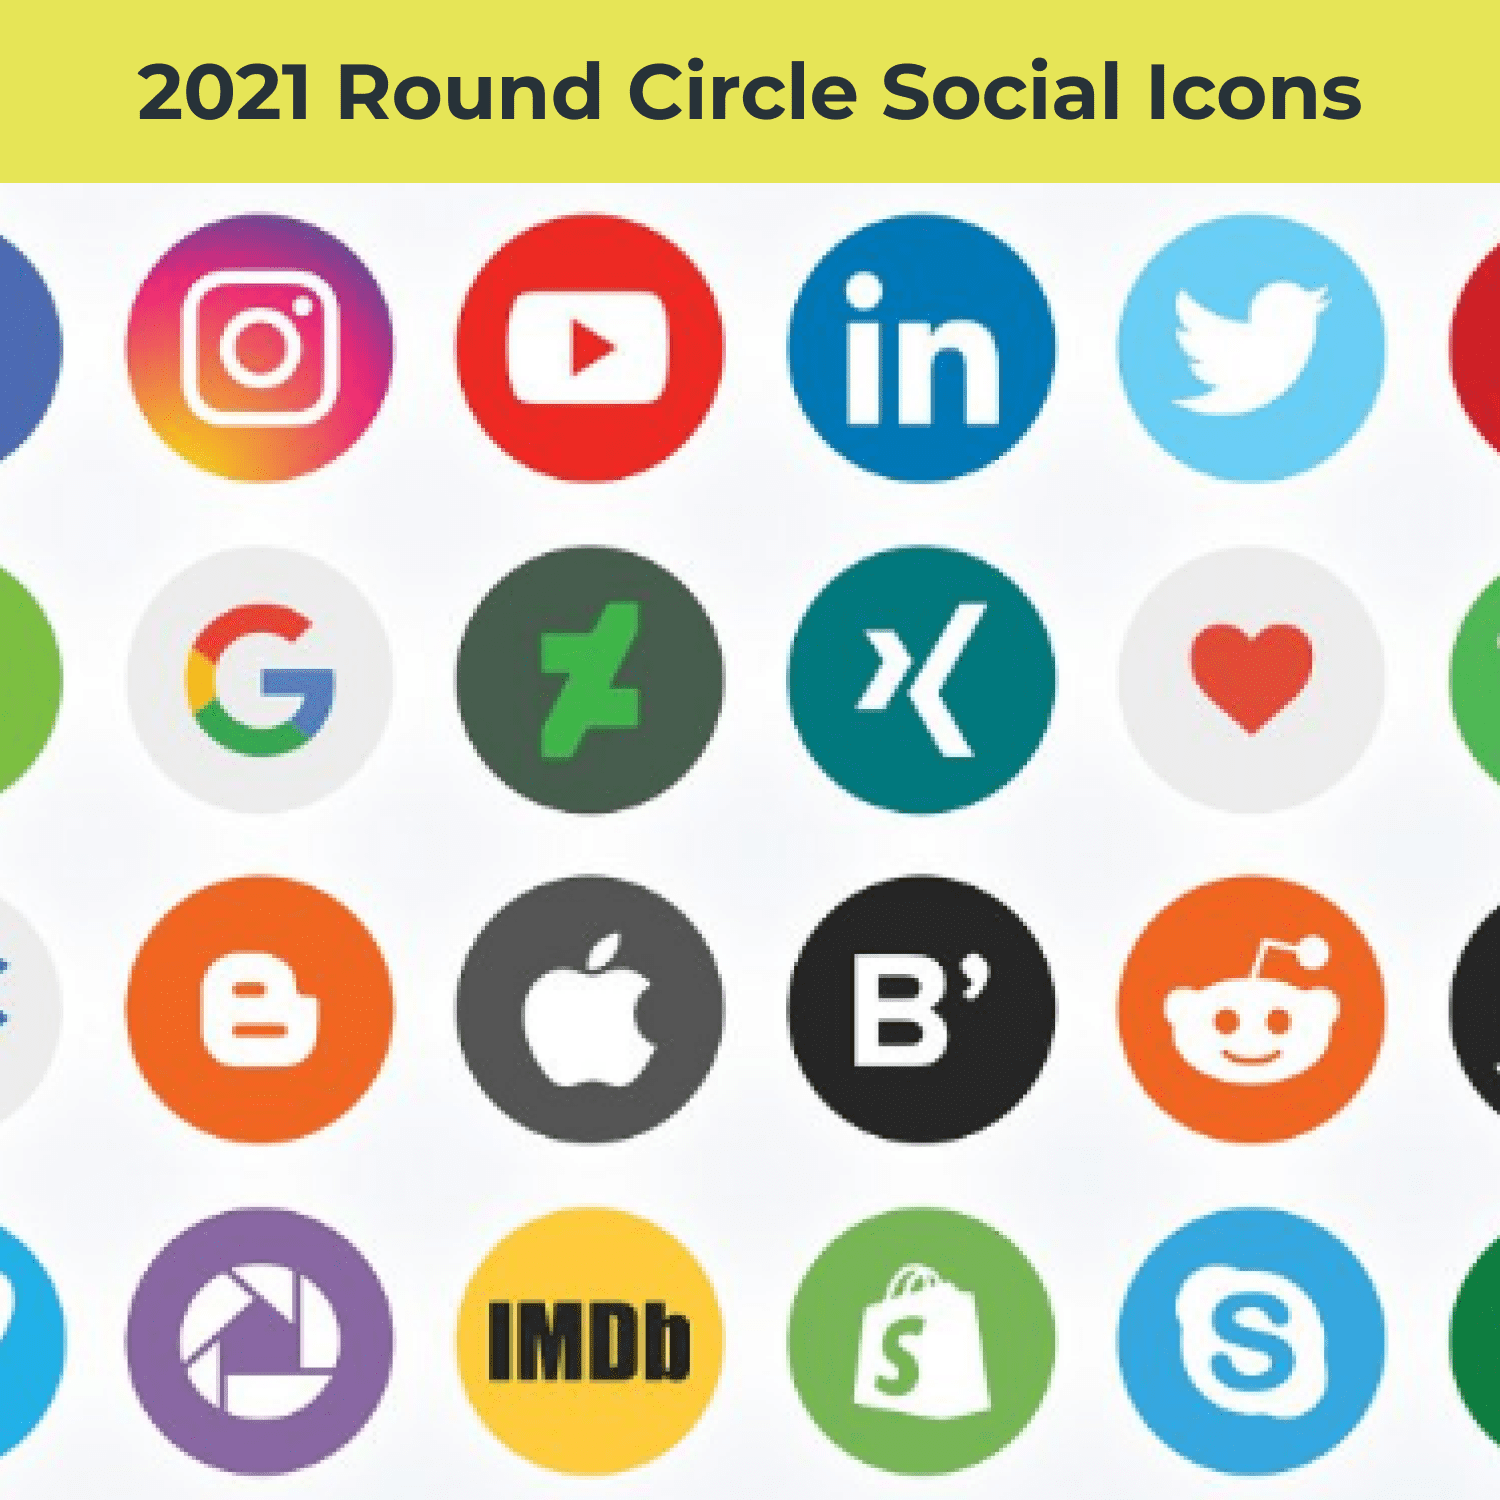 2021 Round Circle Social Icons main cover.